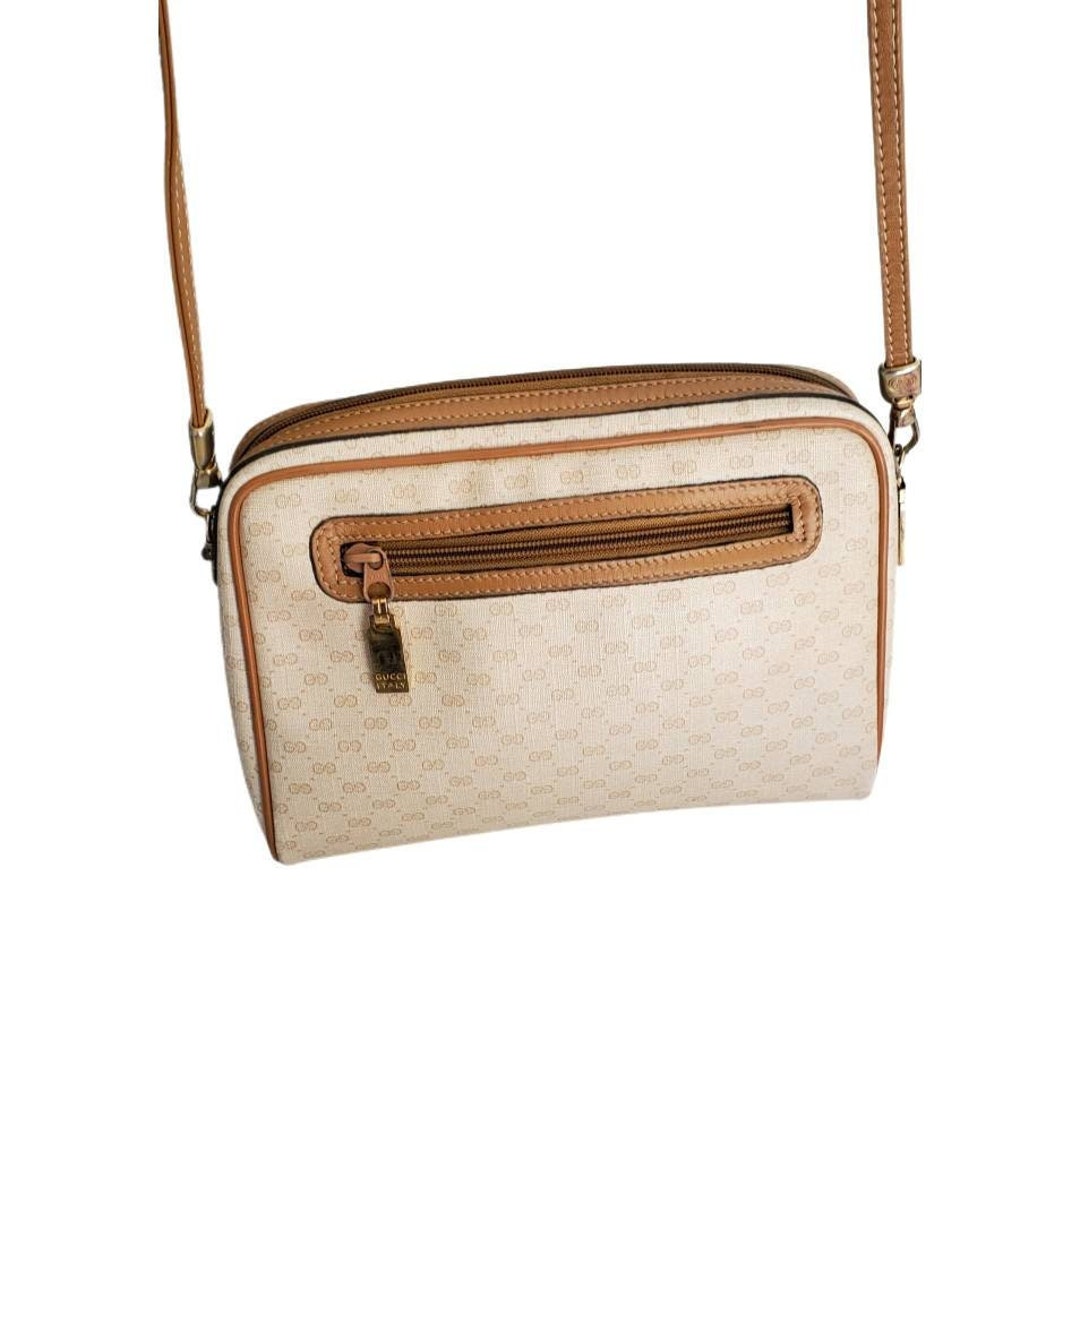 Vintage Gucci beige micro GG monogram print shoulder bag with